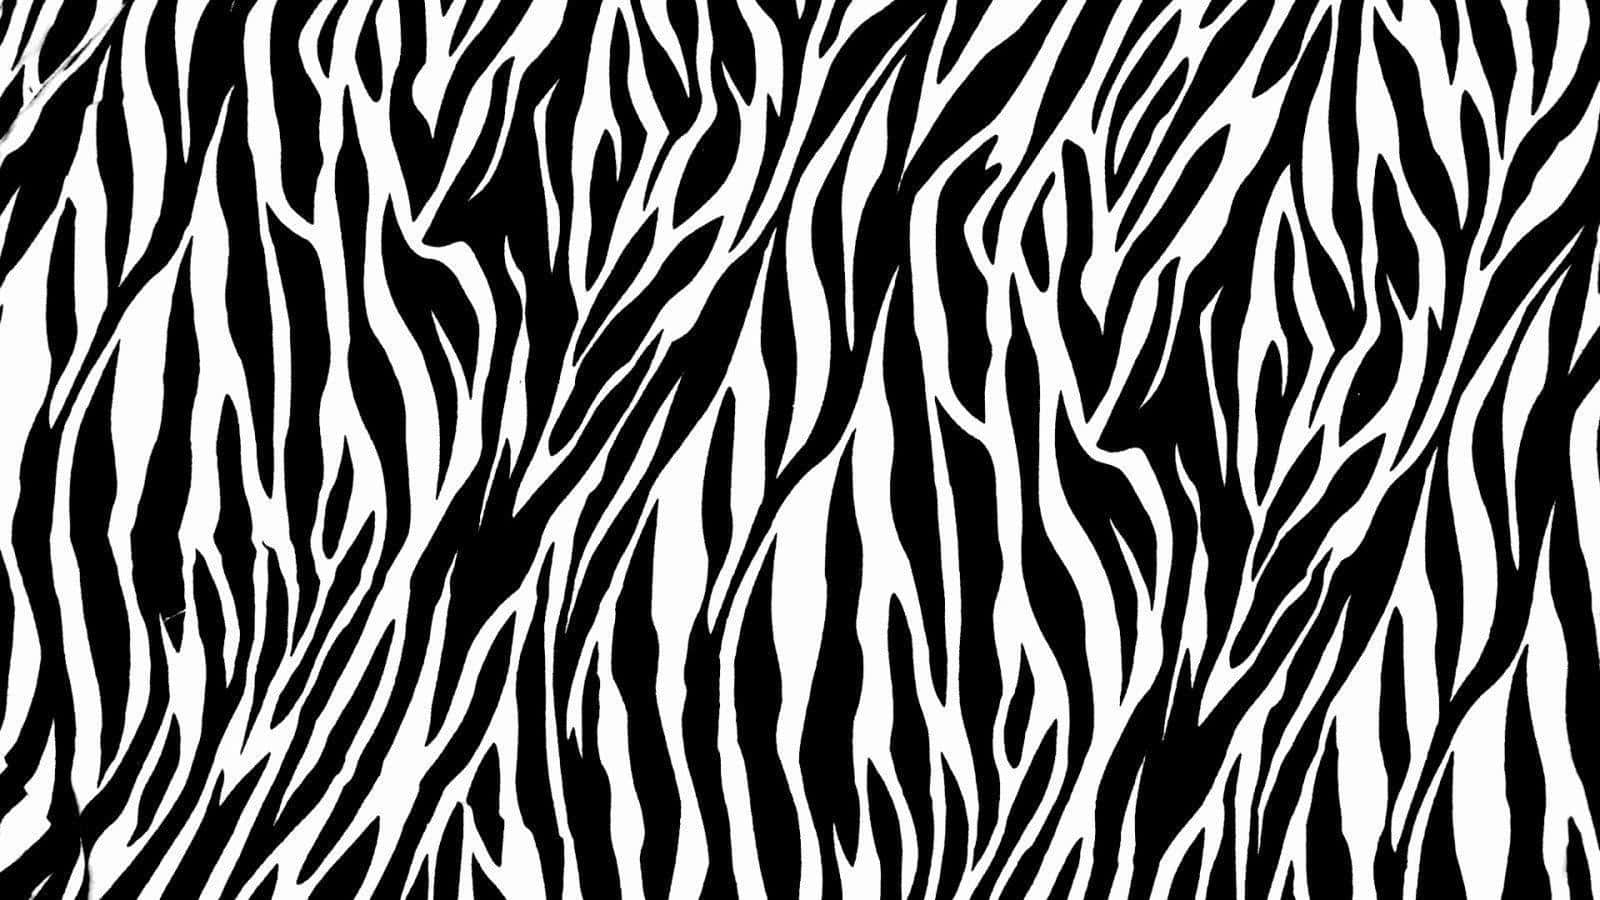 Animal Print Digital Paper Pack Zebra Print, Leopard Print, Tiger Stripes,  Giraffe Spots, Elephant Skin Textures - Instant Digital Download